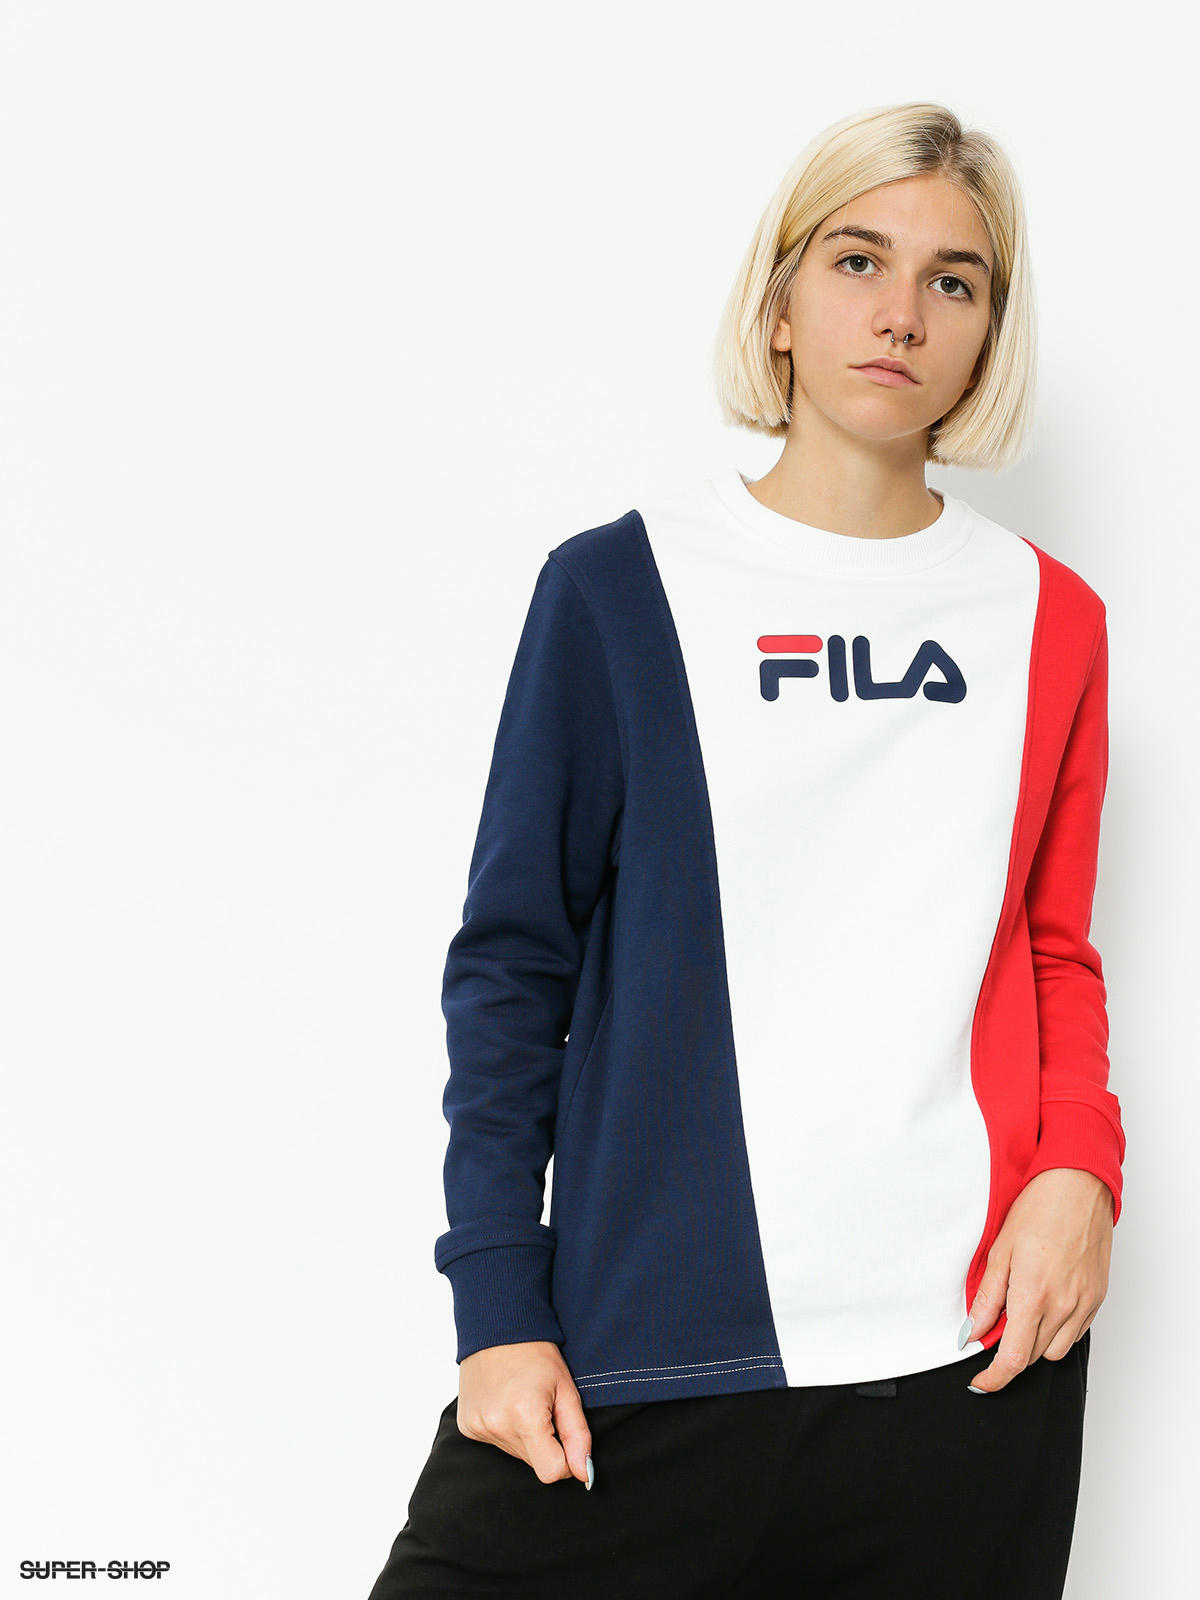 fila red white and blue sweatshirt